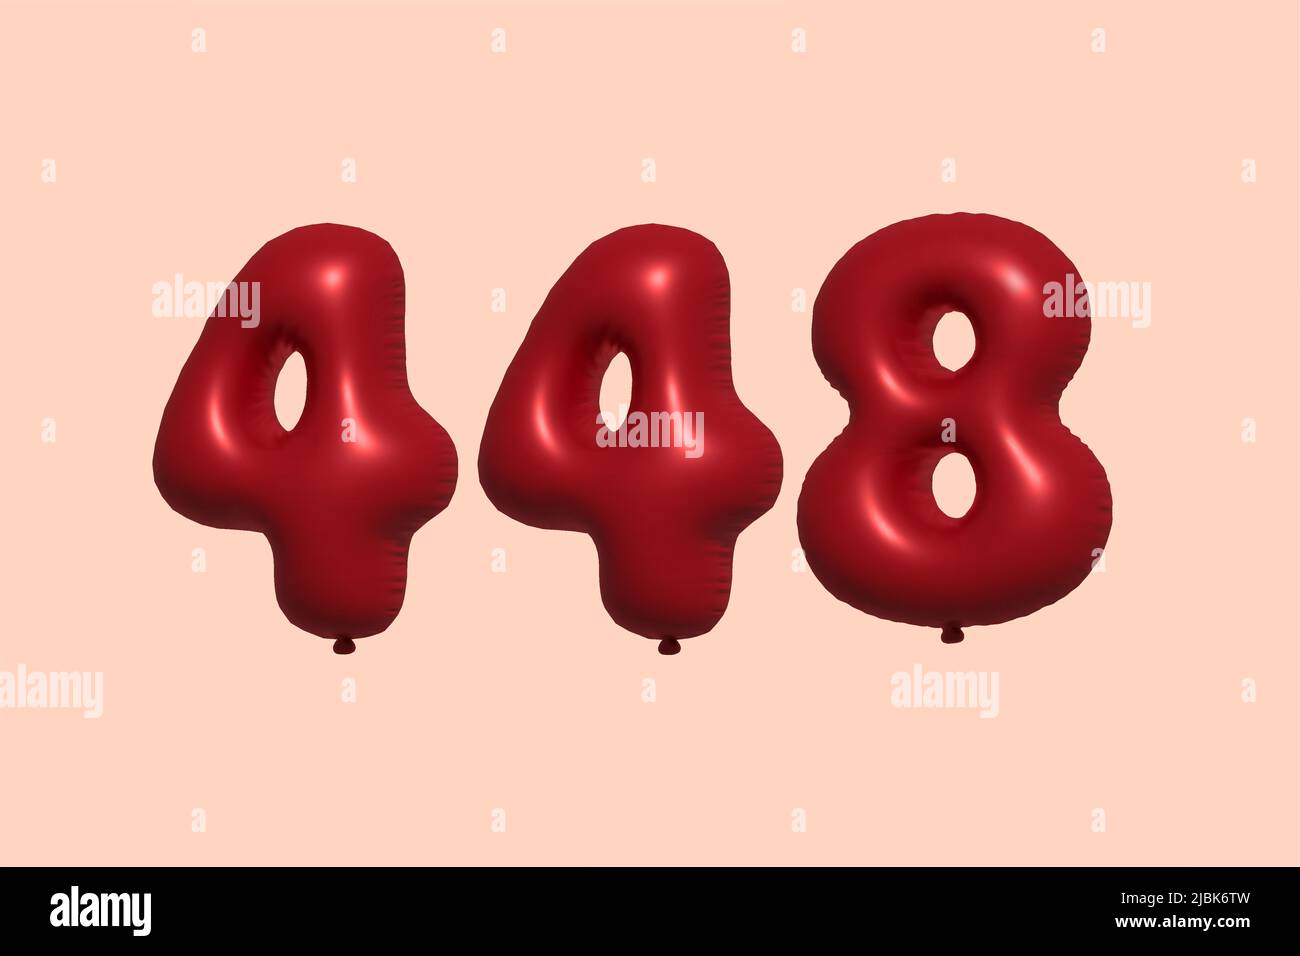 Hélium pour 30 ballons – Sos-Shop